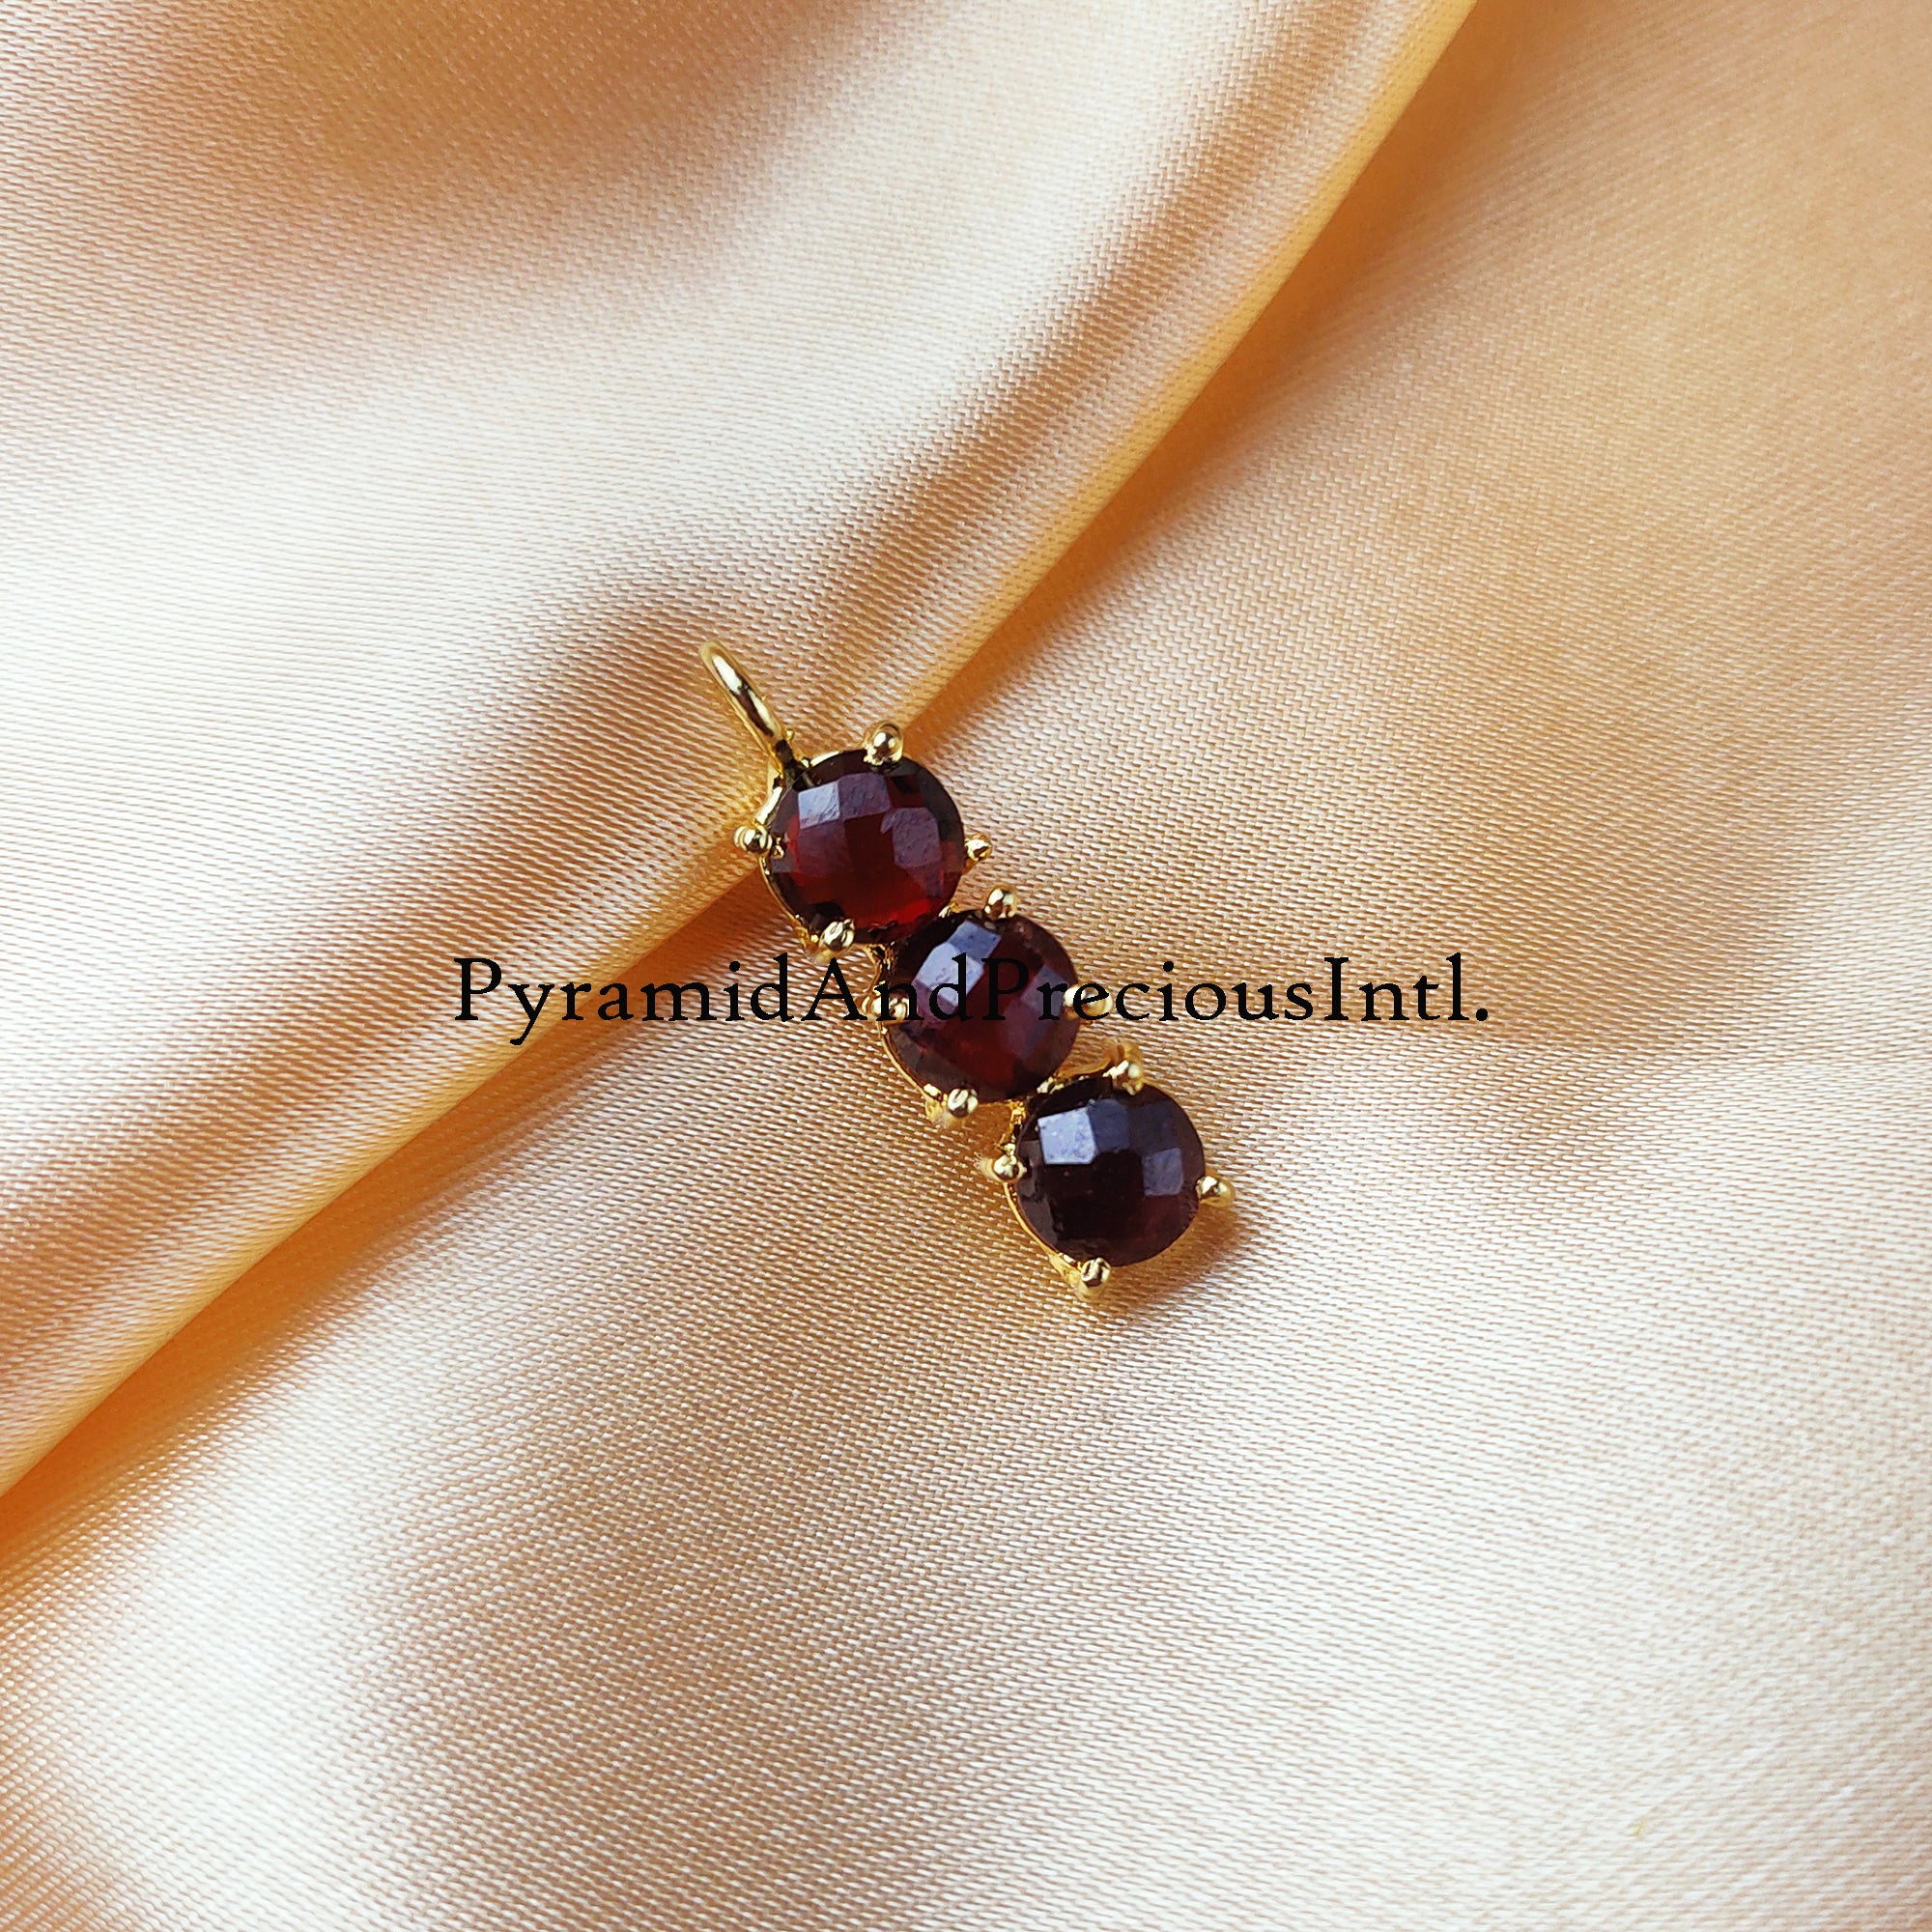 Red Garnet Gemstone Necklace Pendant, Garnet Faceted Cut Stone Necklace Pendant